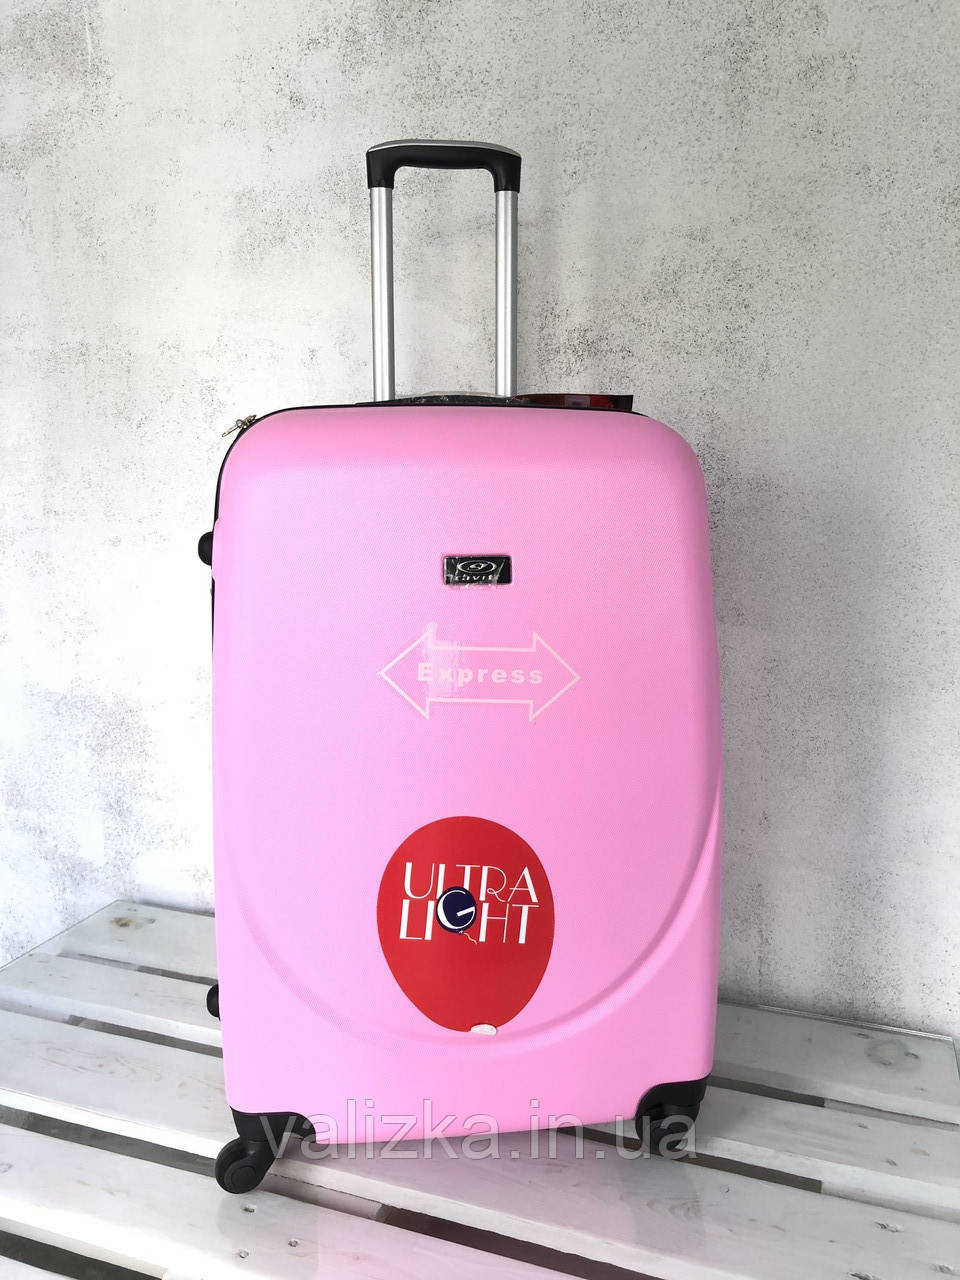 Велика пластикова валіза на 4 колесах рожева/Велика пластикова валіза на колесах ріжева Польща